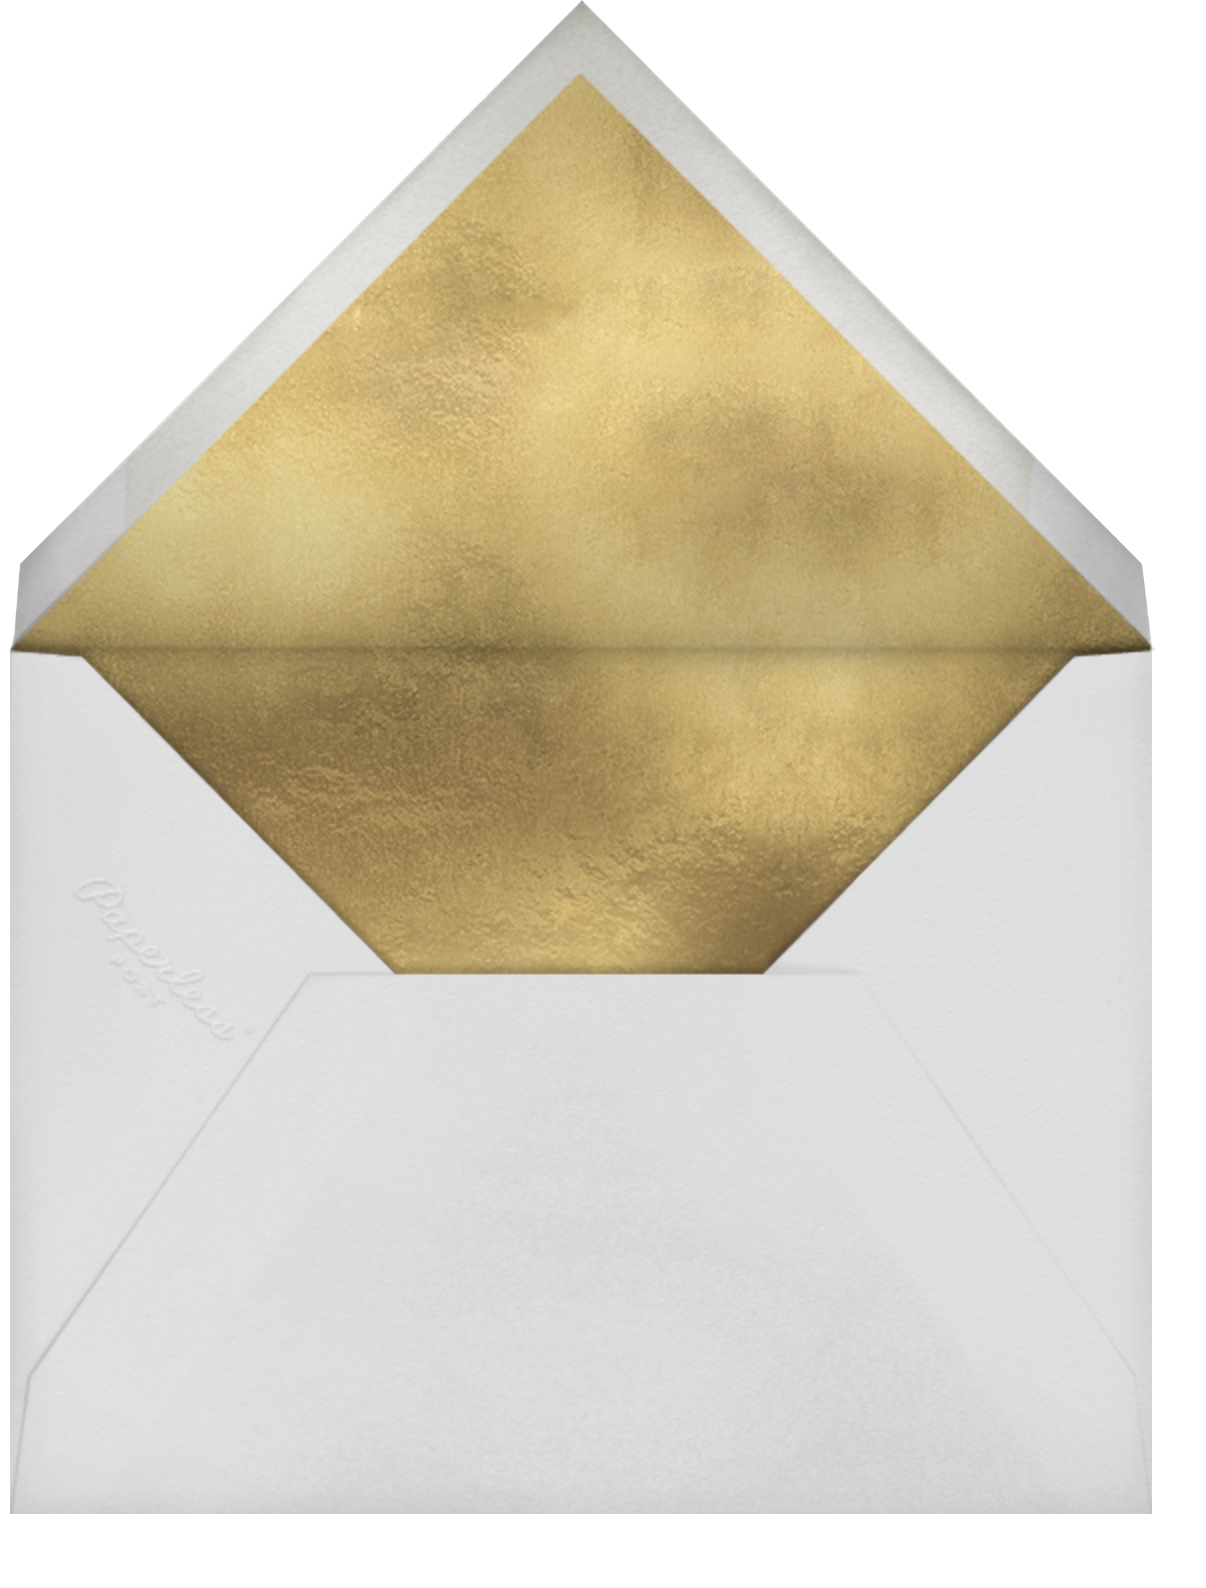 Grand Plans Photo - Paperless Post - Envelope